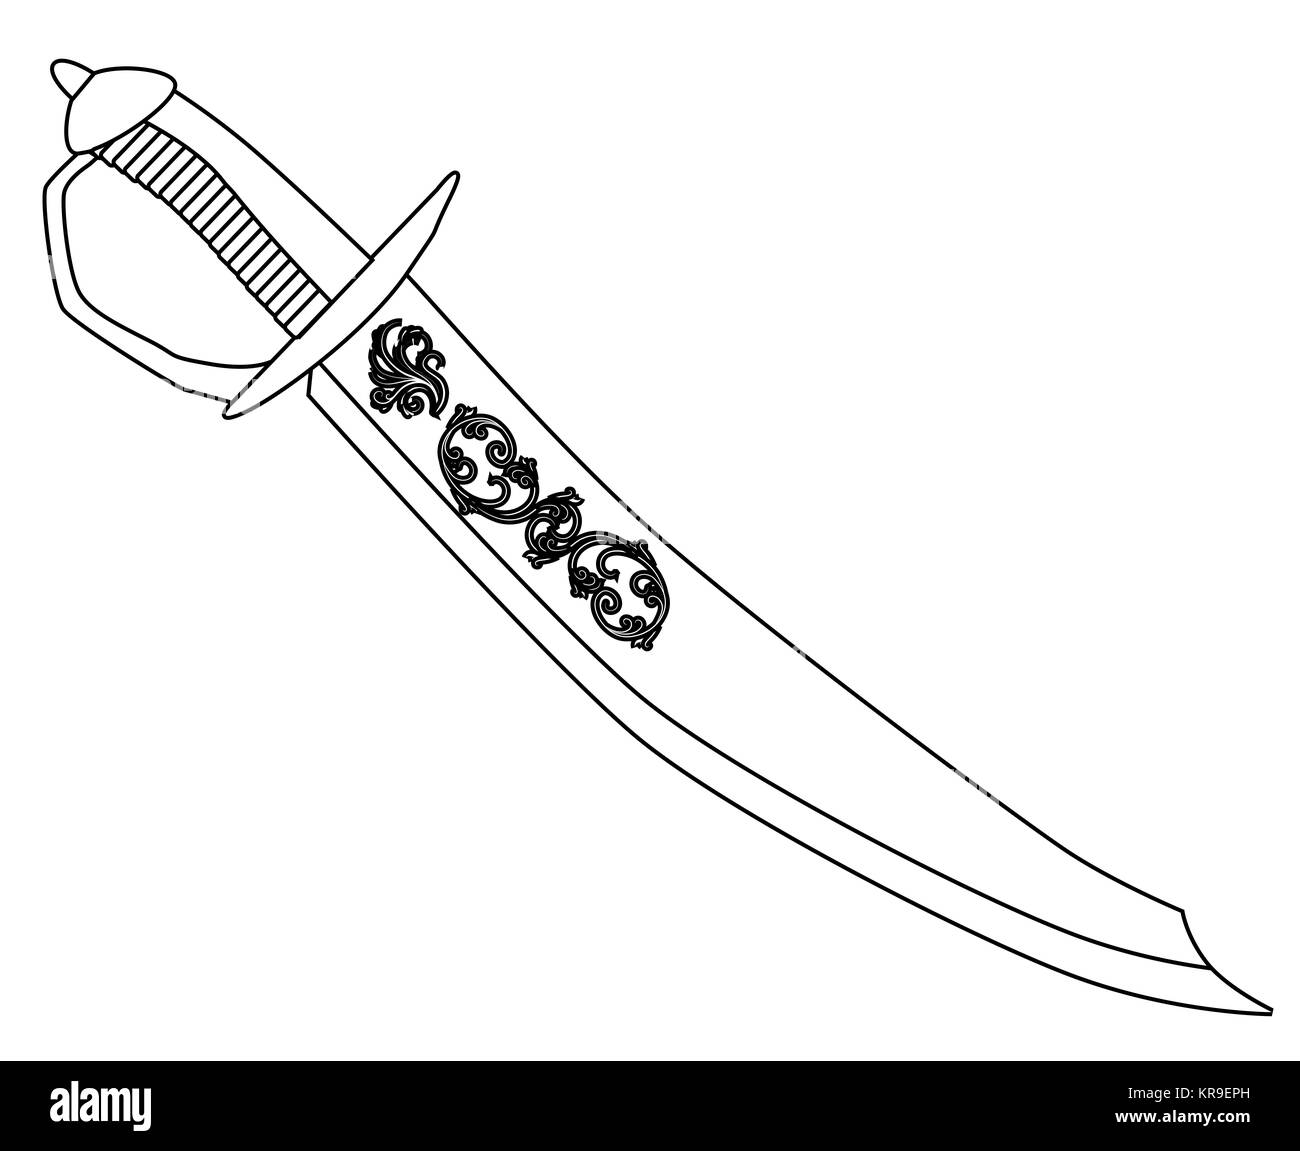 90+ Crossed Cutlass Pirate Sword Stock Illustrations, Royalty-Free Vector  Graphics & Clip Art - iStock